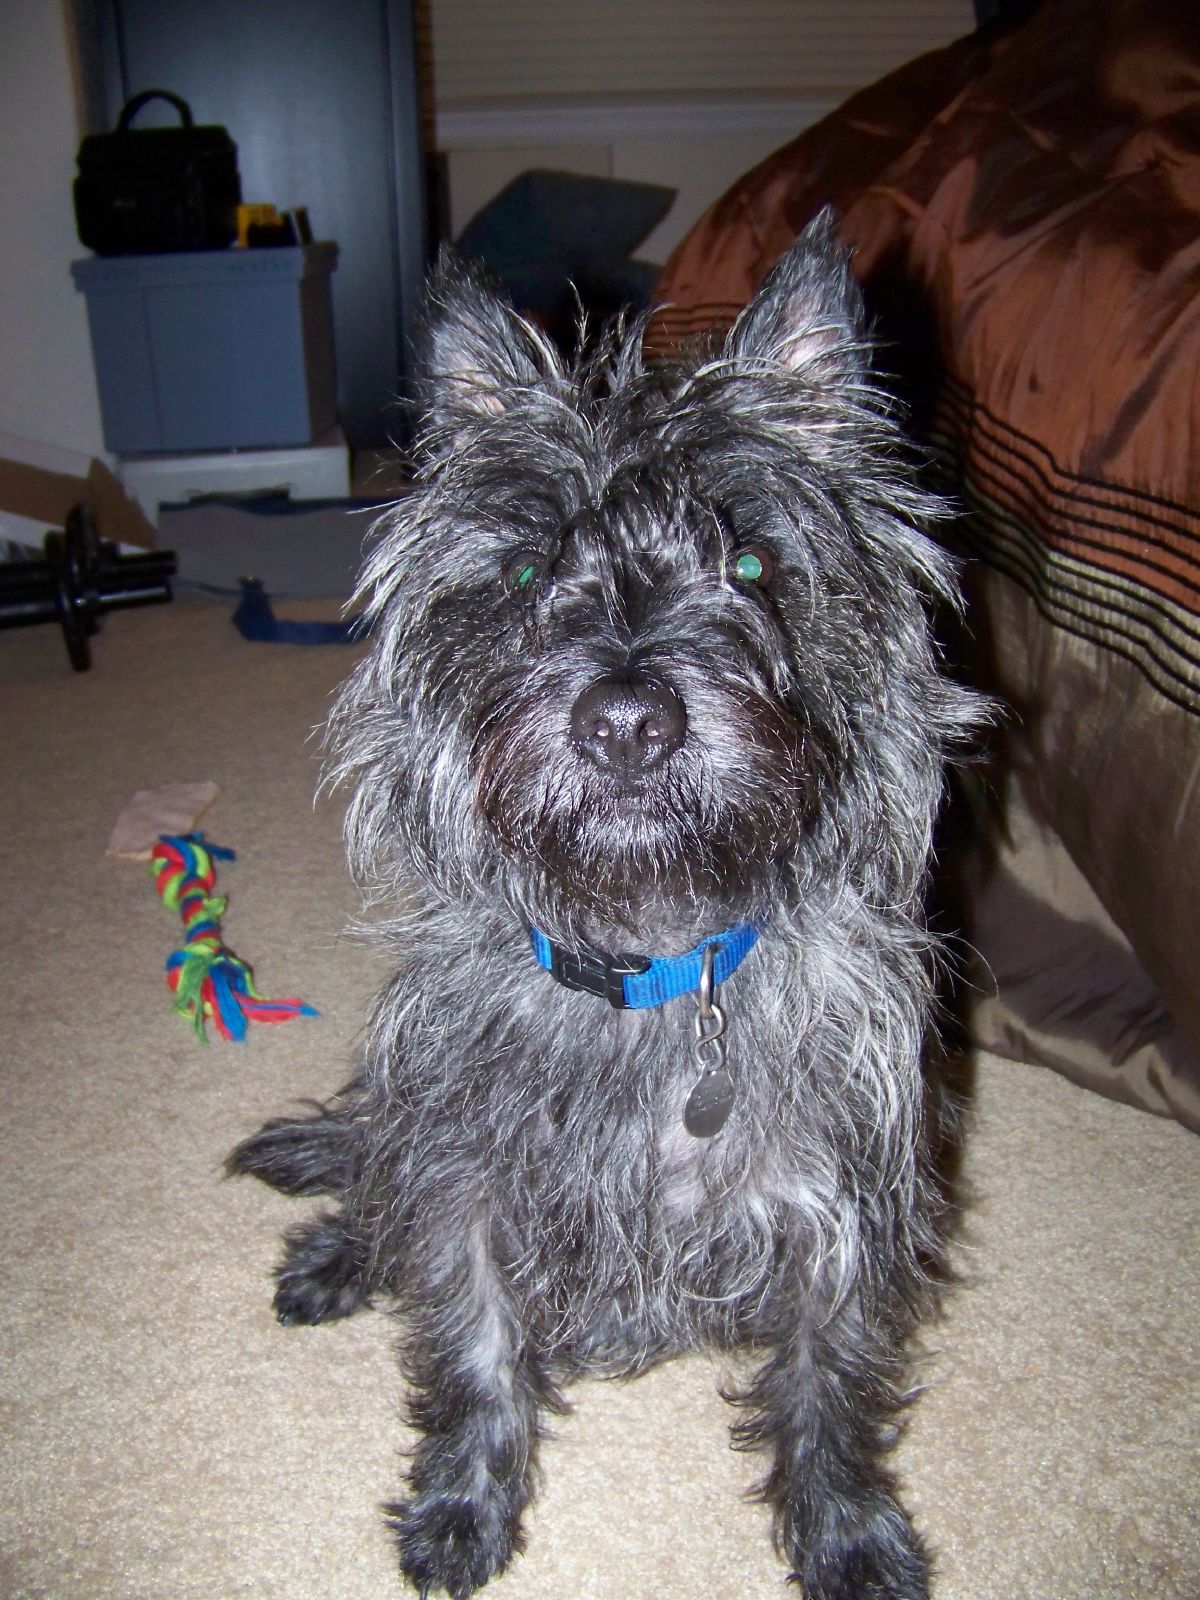 small gray furry dog sitting on floor next to stuffed animal